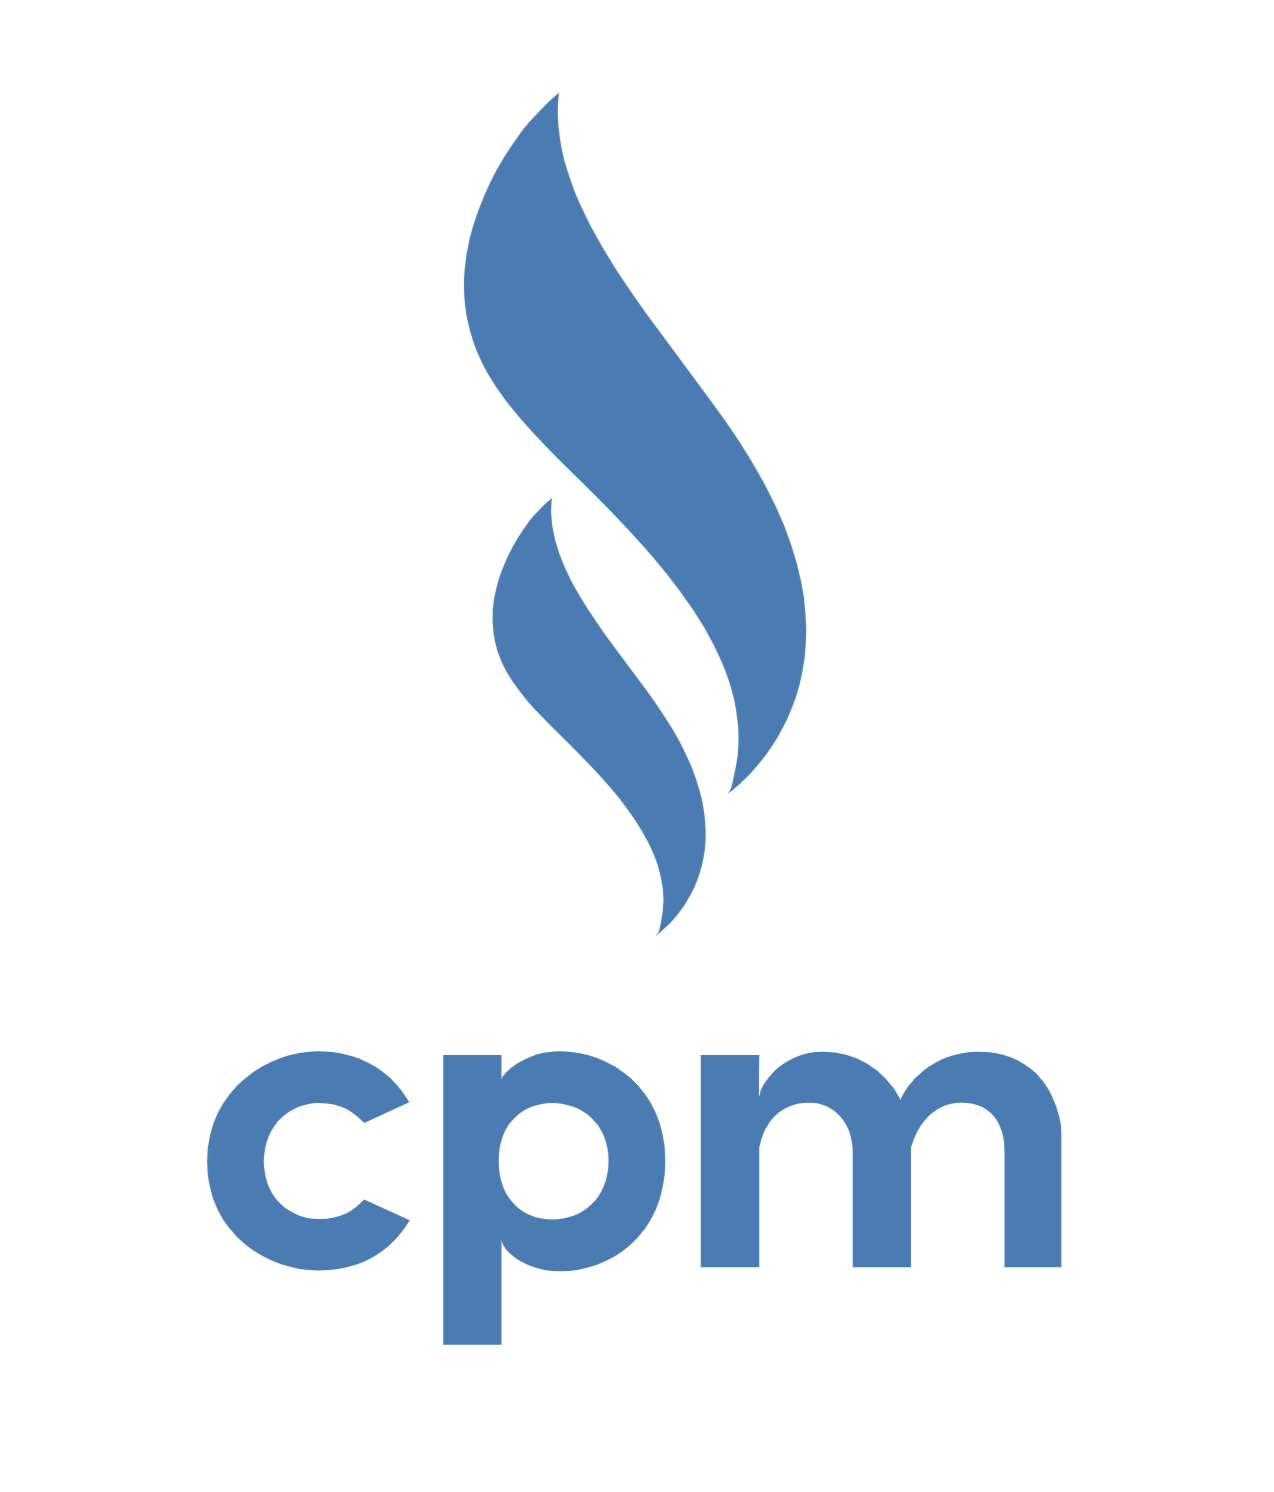 cpm logo